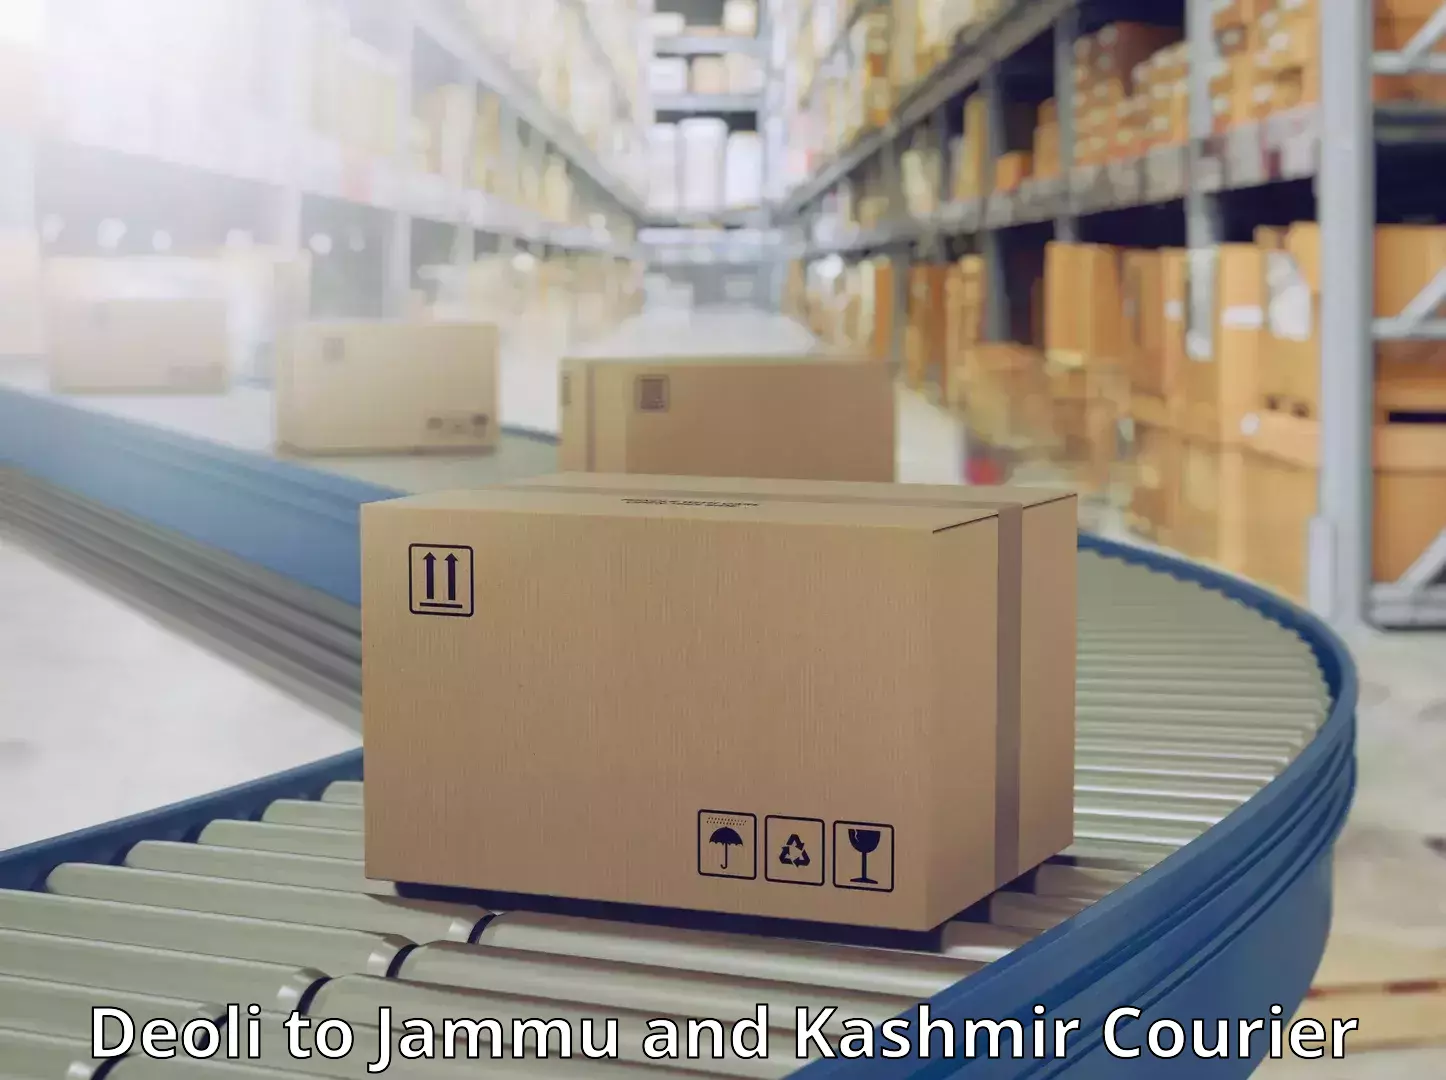 Express courier capabilities Deoli to Jammu and Kashmir